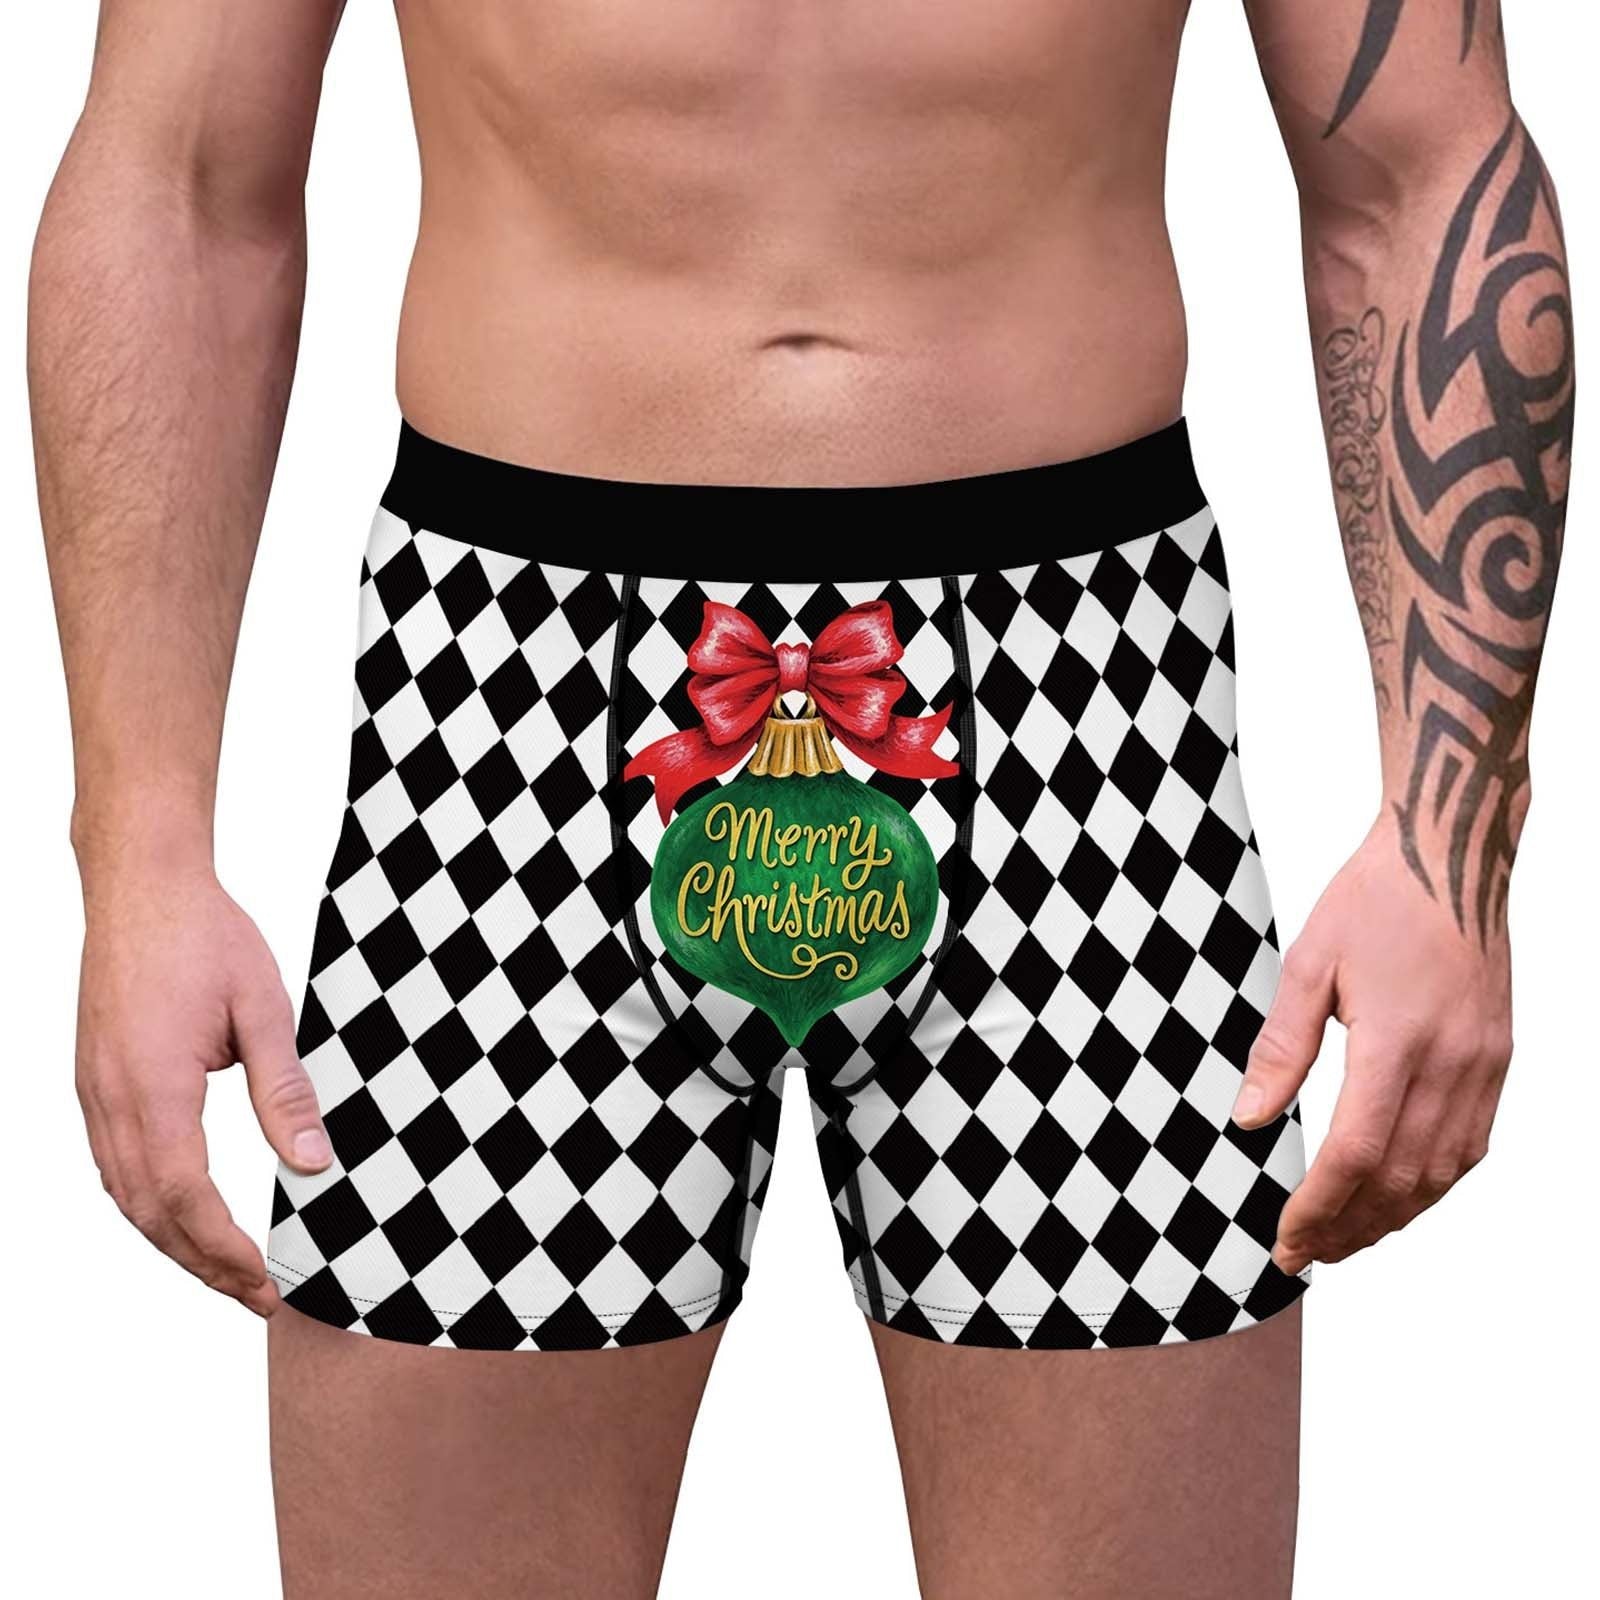 Mens Funny Boxer Briefs – Santa Clause Christmas Gift Underwear